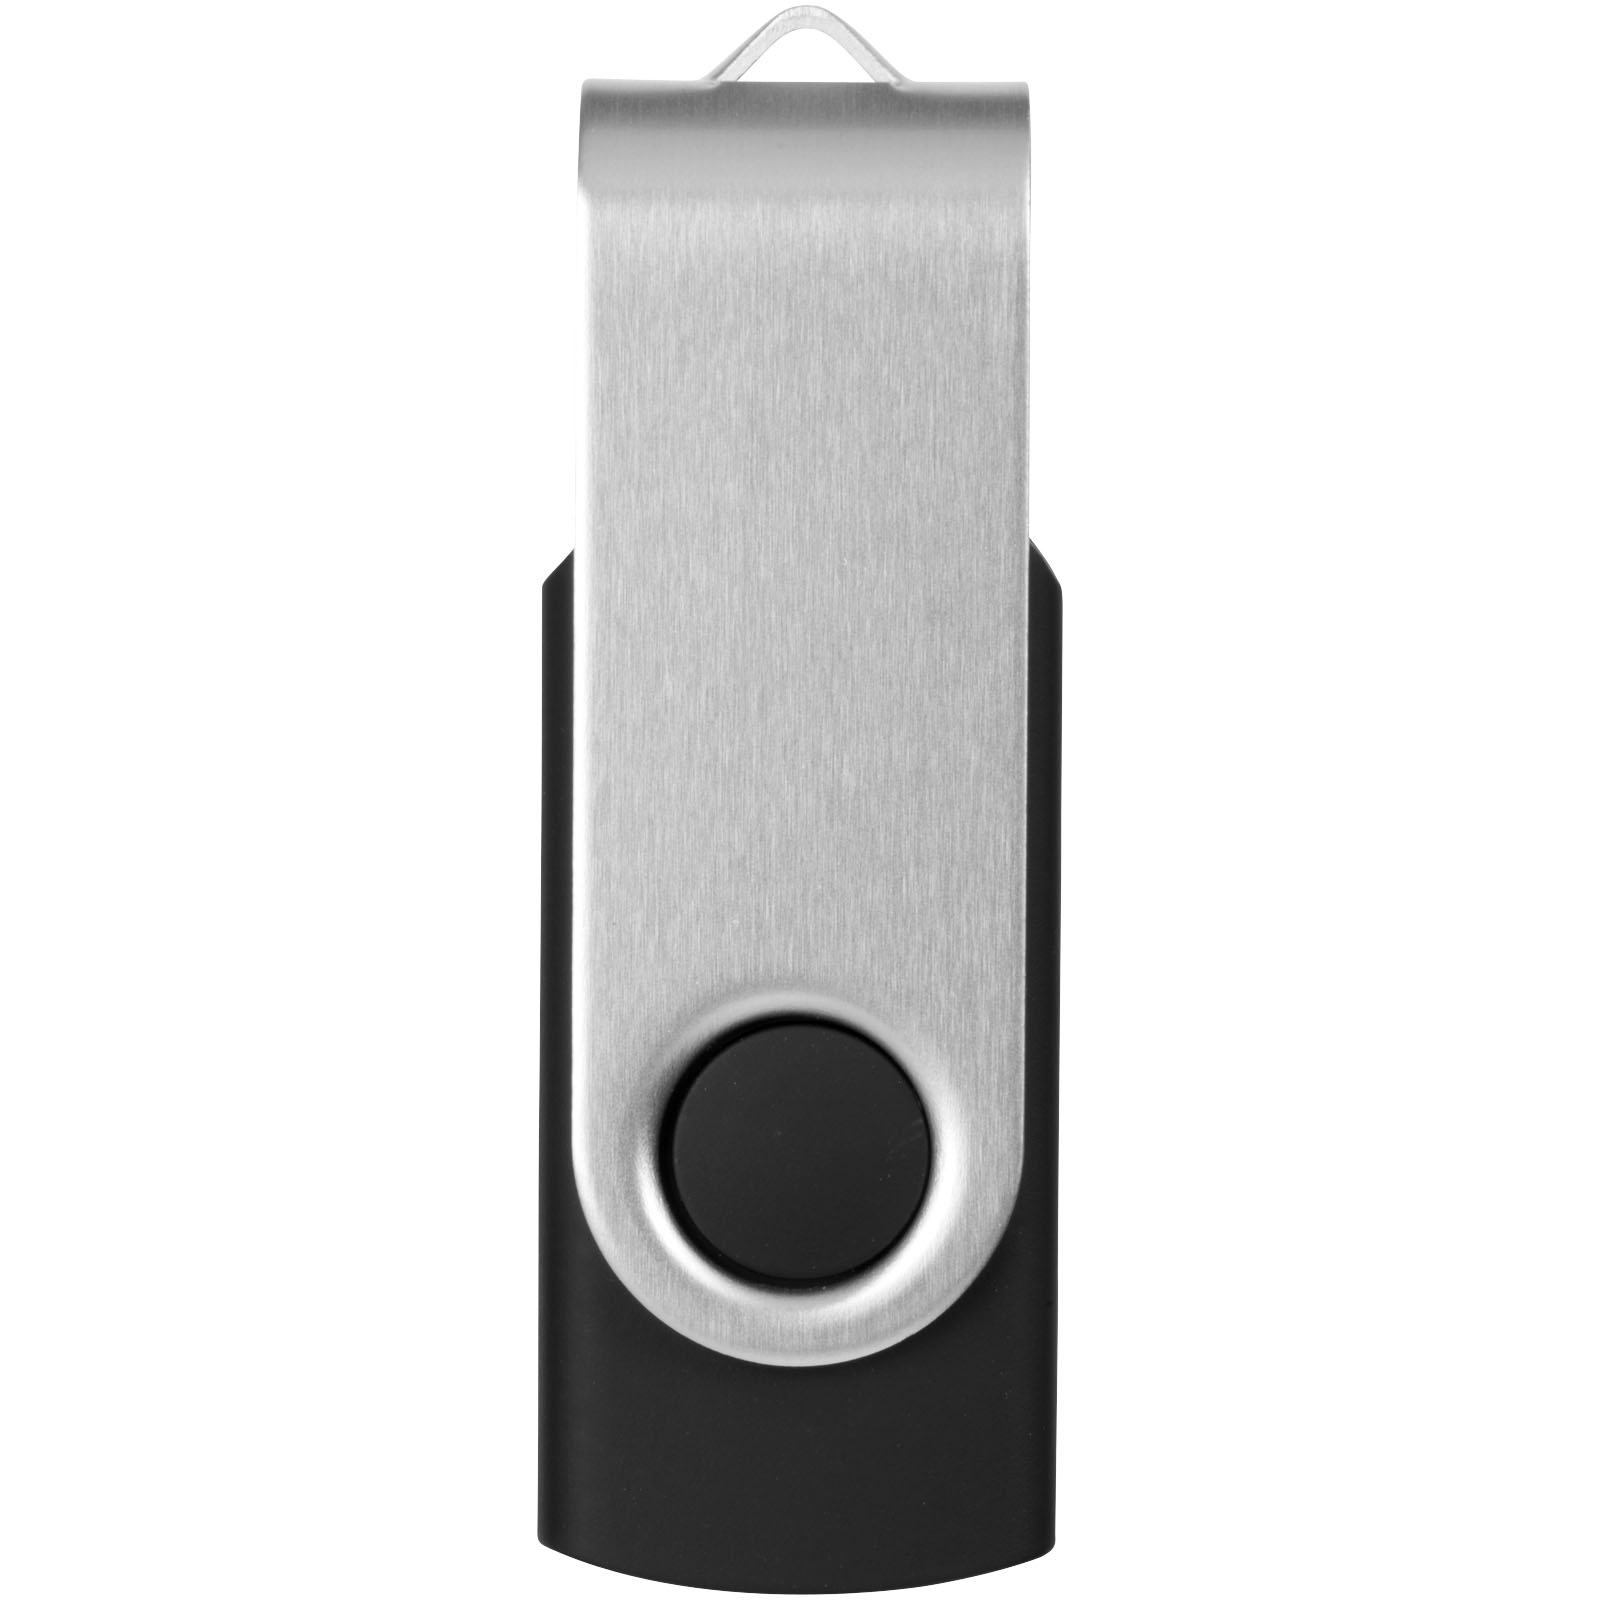 Advertising USB Flash Drives - Rotate-basic 2GB USB flash drive - 3